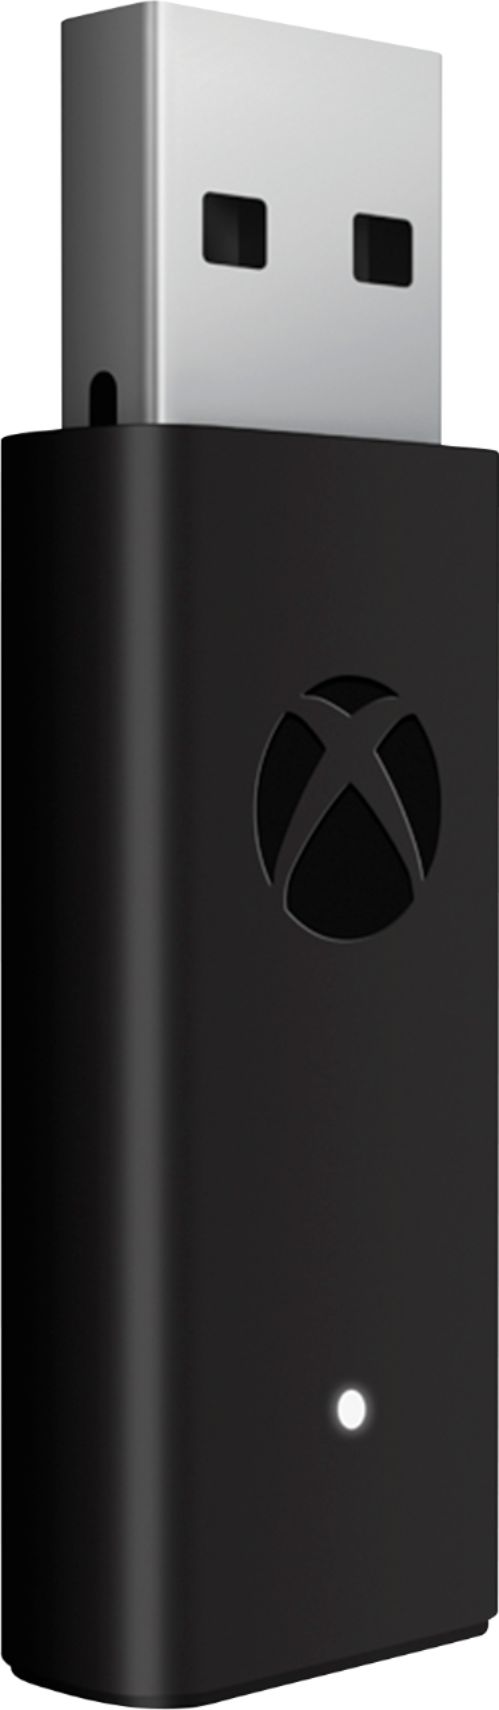 Best Buy: Microsoft Xbox Wireless Adapter for Windows 10 Black 6HN